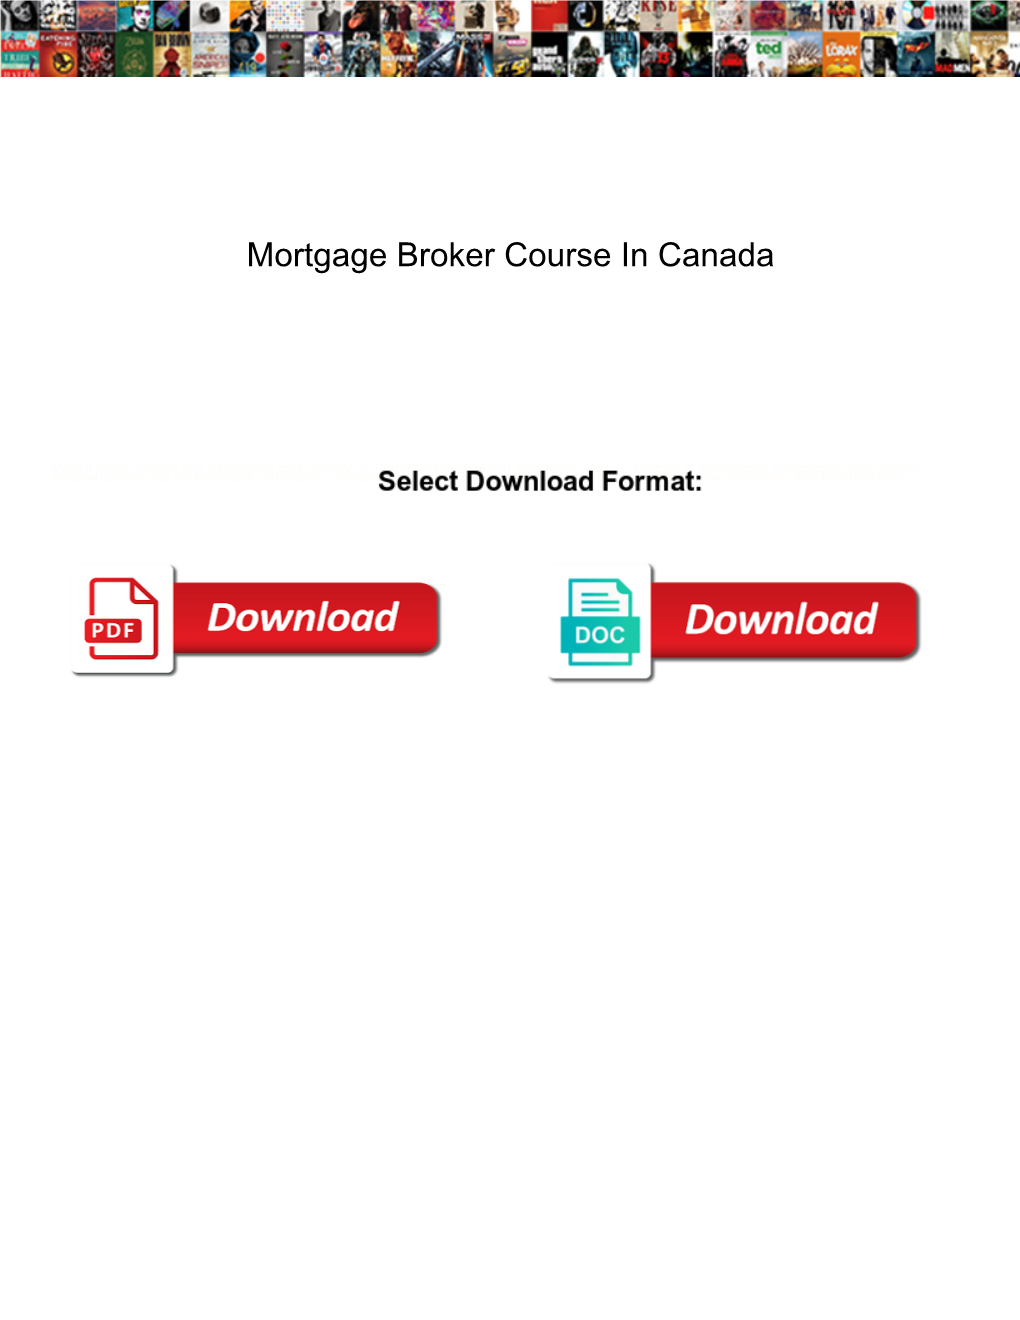 Mortgage Broker Course in Canada